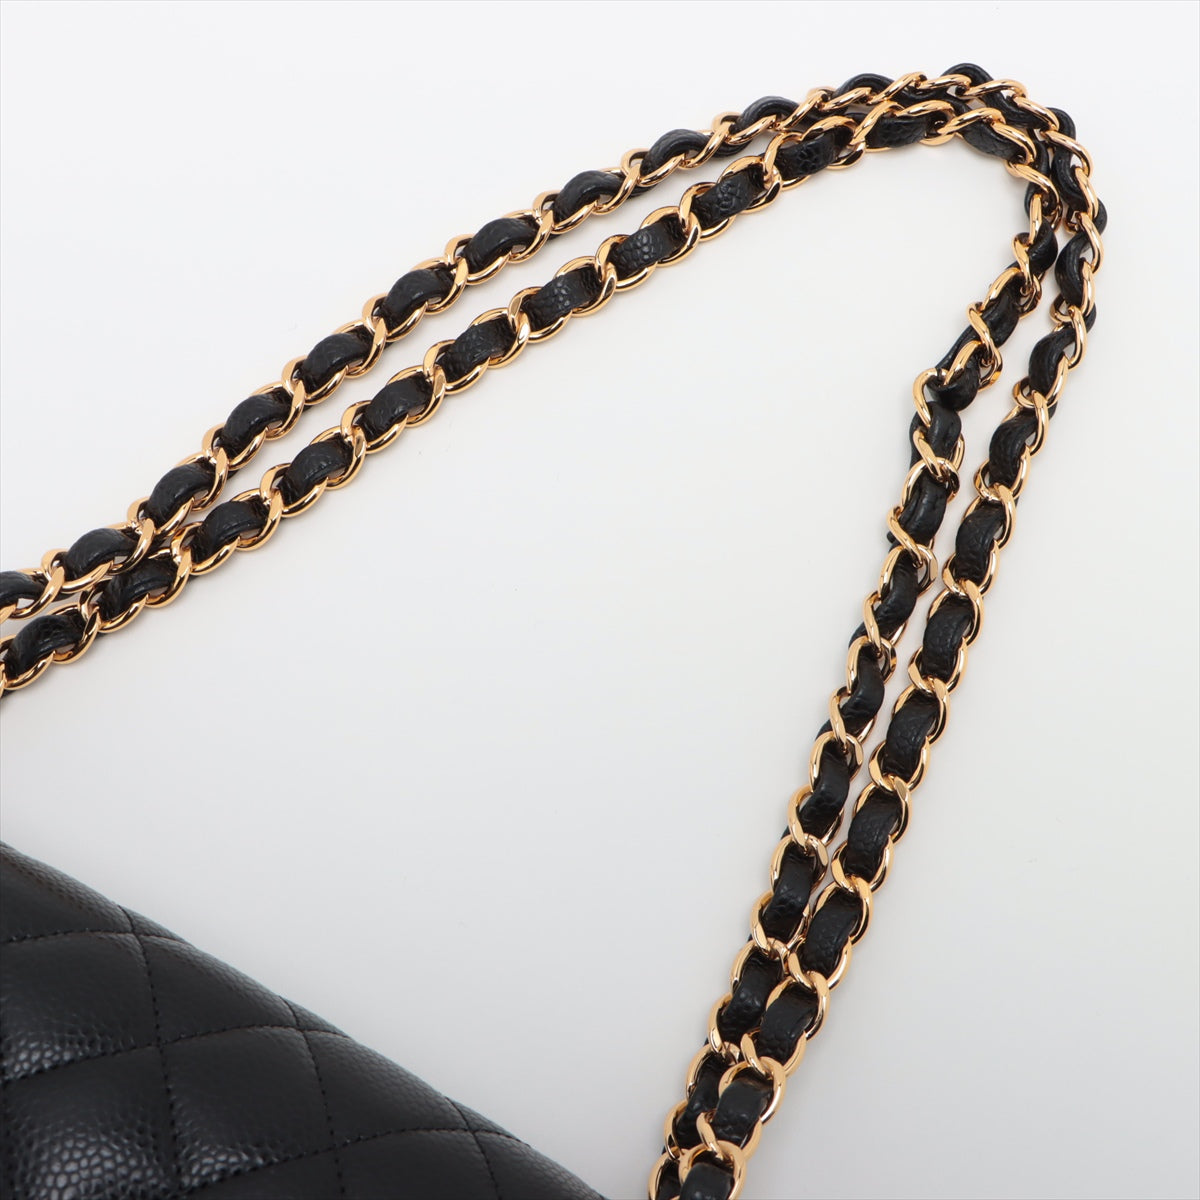 Chanel Matrasse 25 Caviar S Double Flap Double Chain Bag Black G  15th